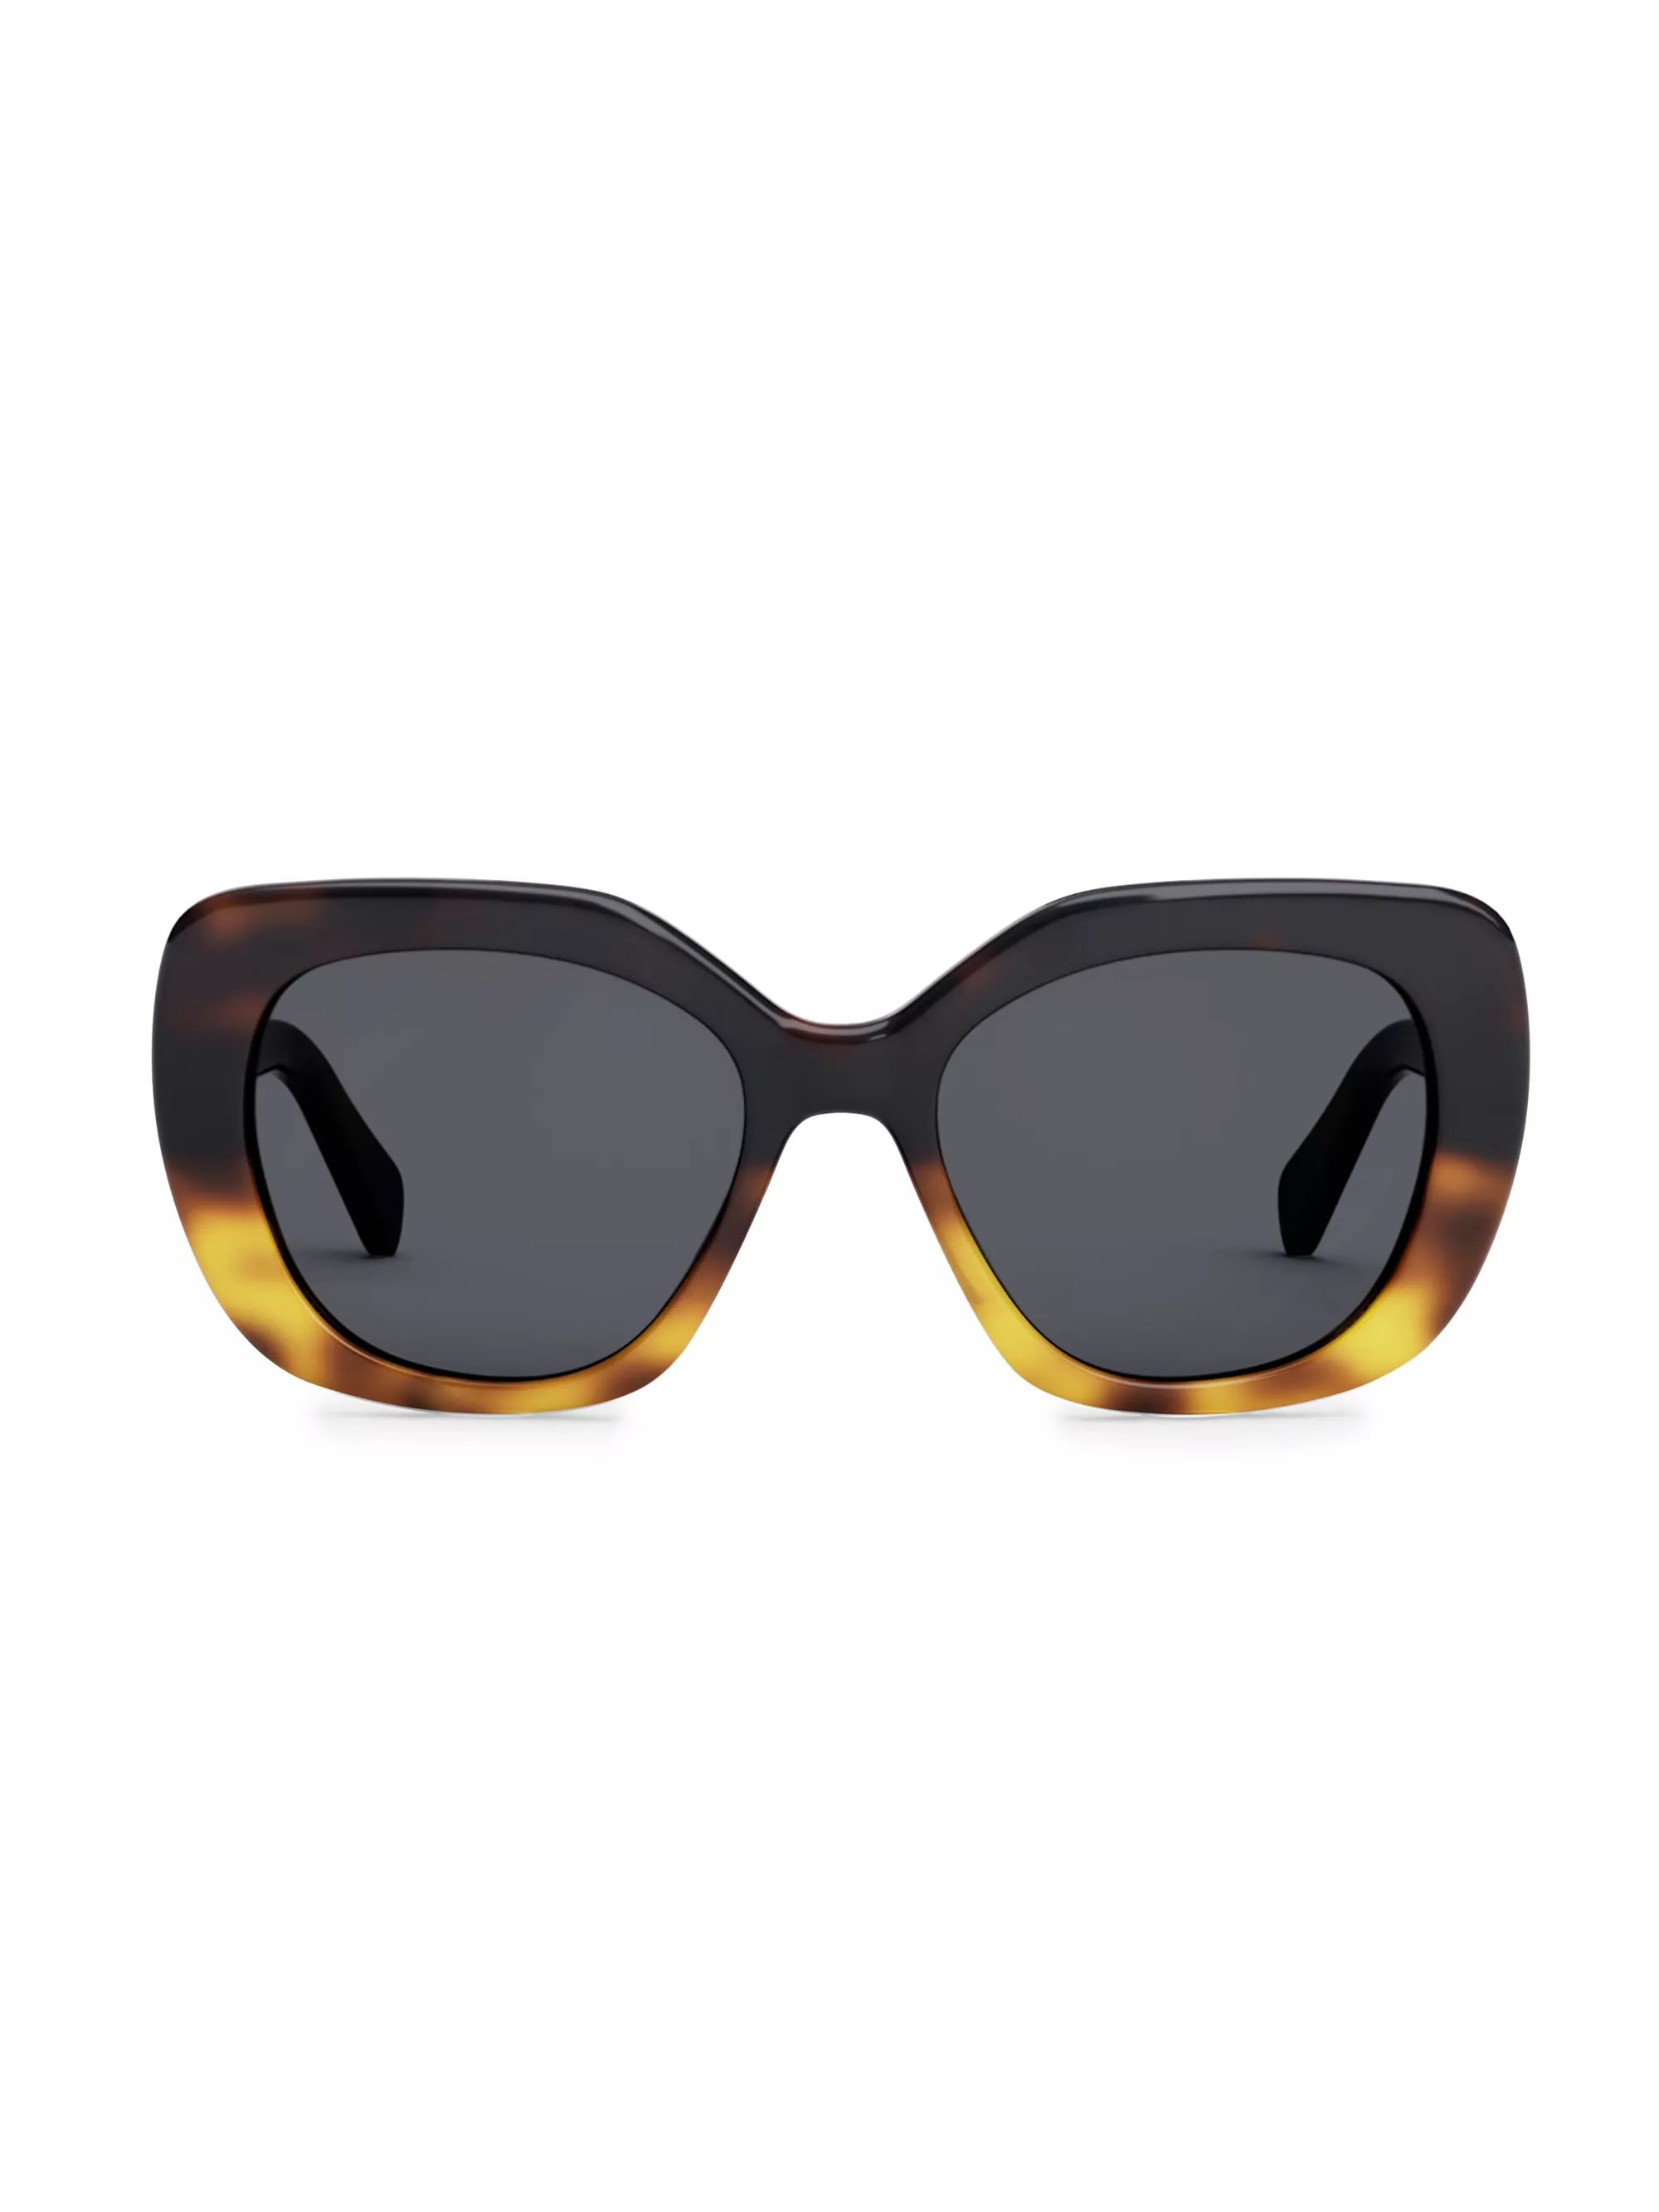 Shop CELINE 55MM Butterfly Round Sunglasses | Saks Fifth Avenue | Saks Fifth Avenue